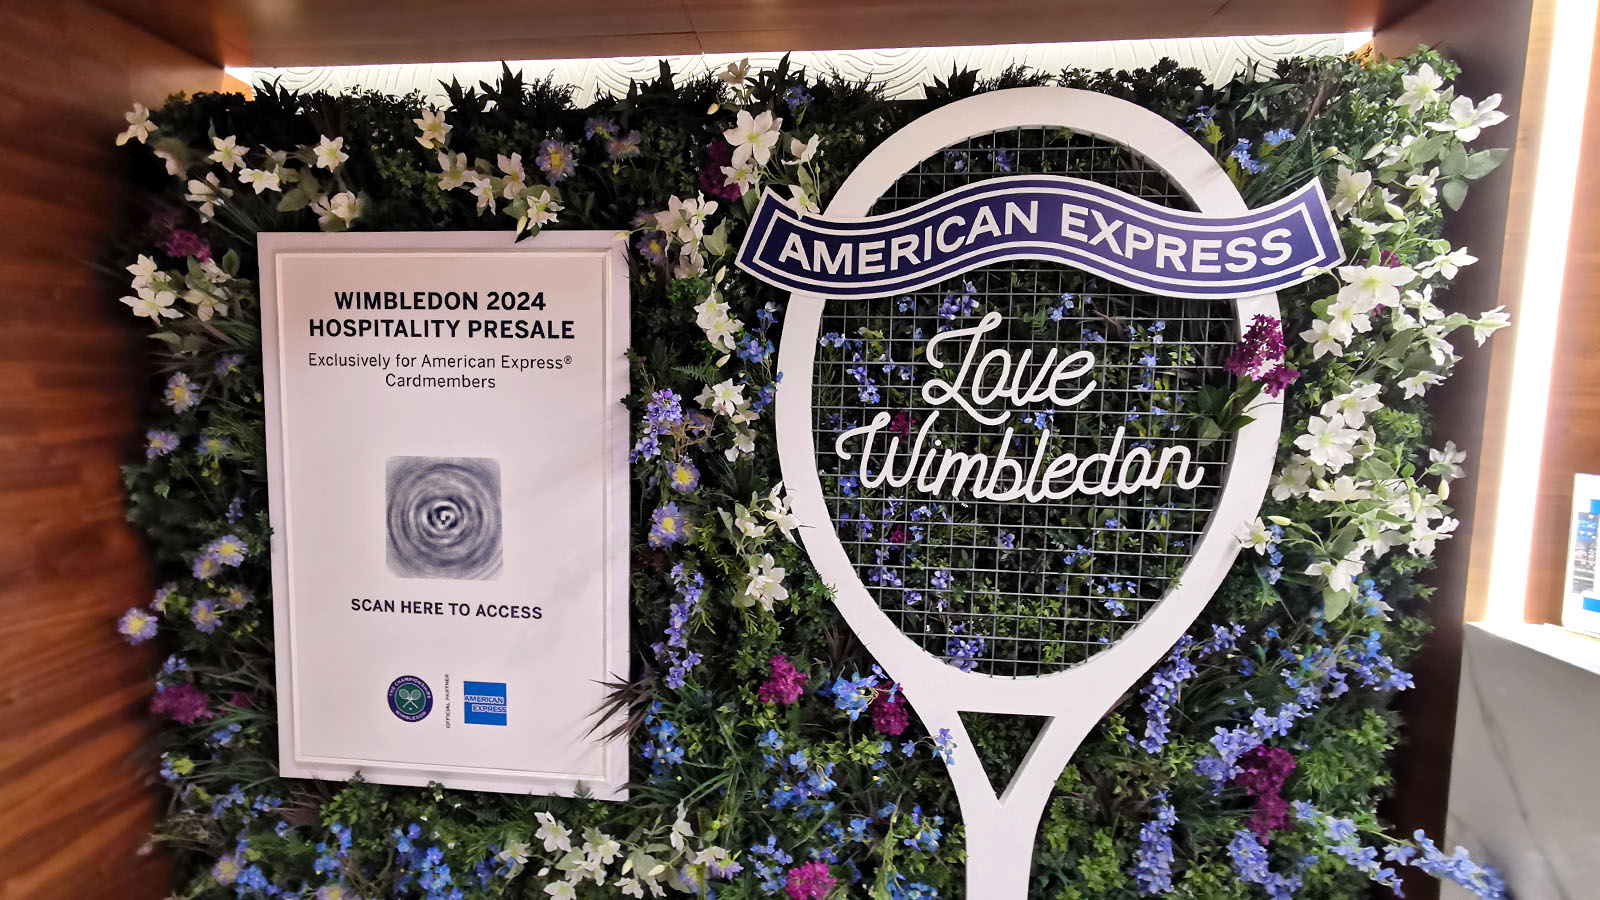 Tennis information in the American Express Centurion Lounge, London Heathrow